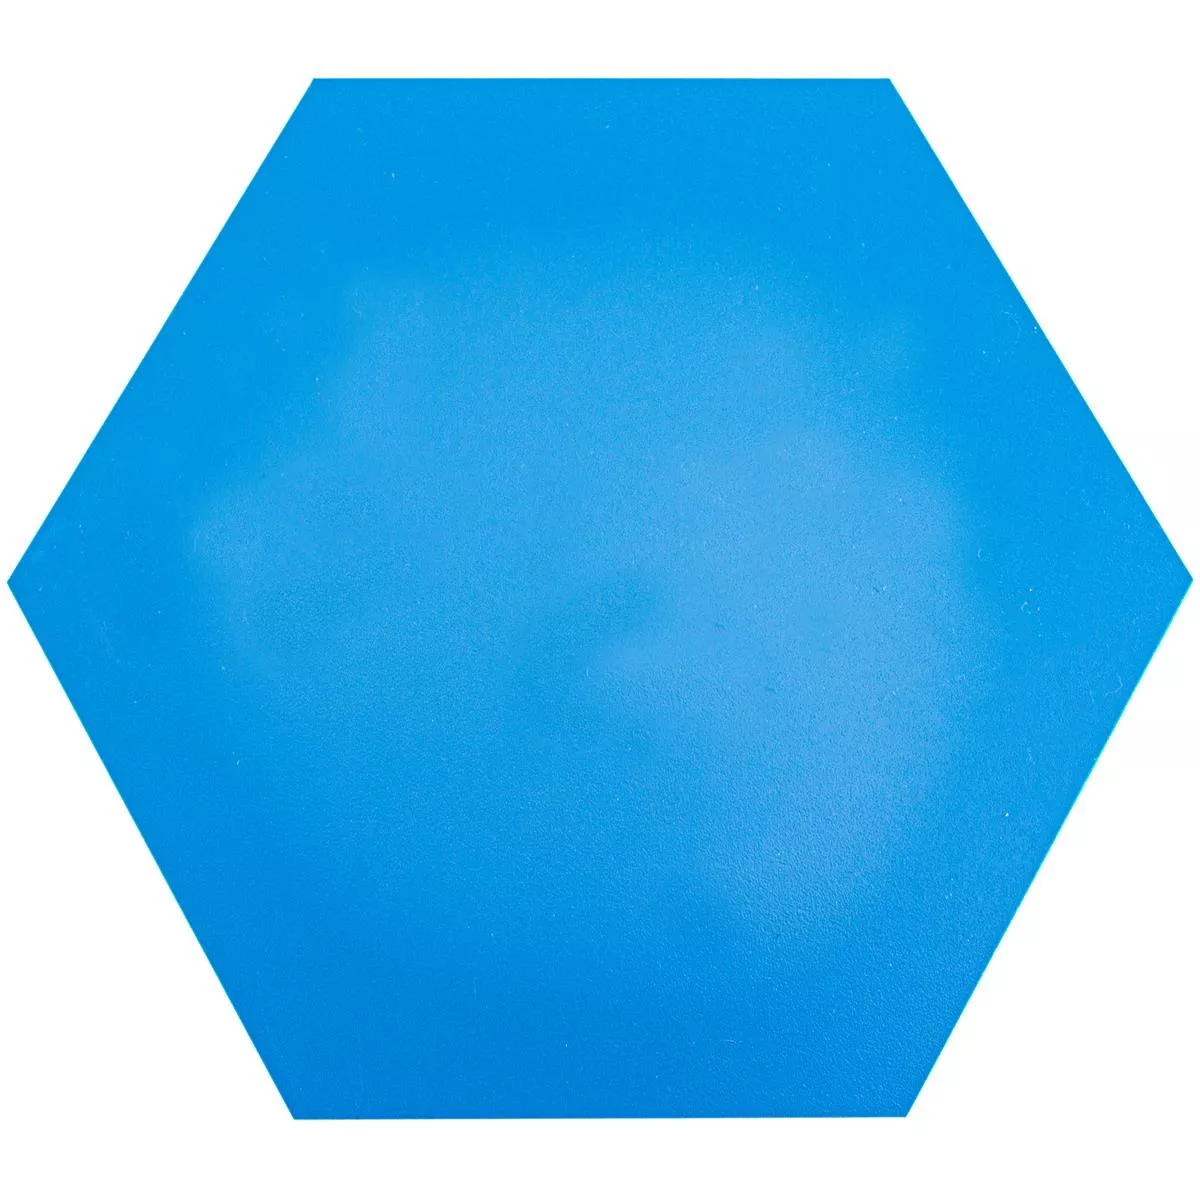 Vinyle Hexagone Carrelage Mural Century Auto Adhésif Bleu